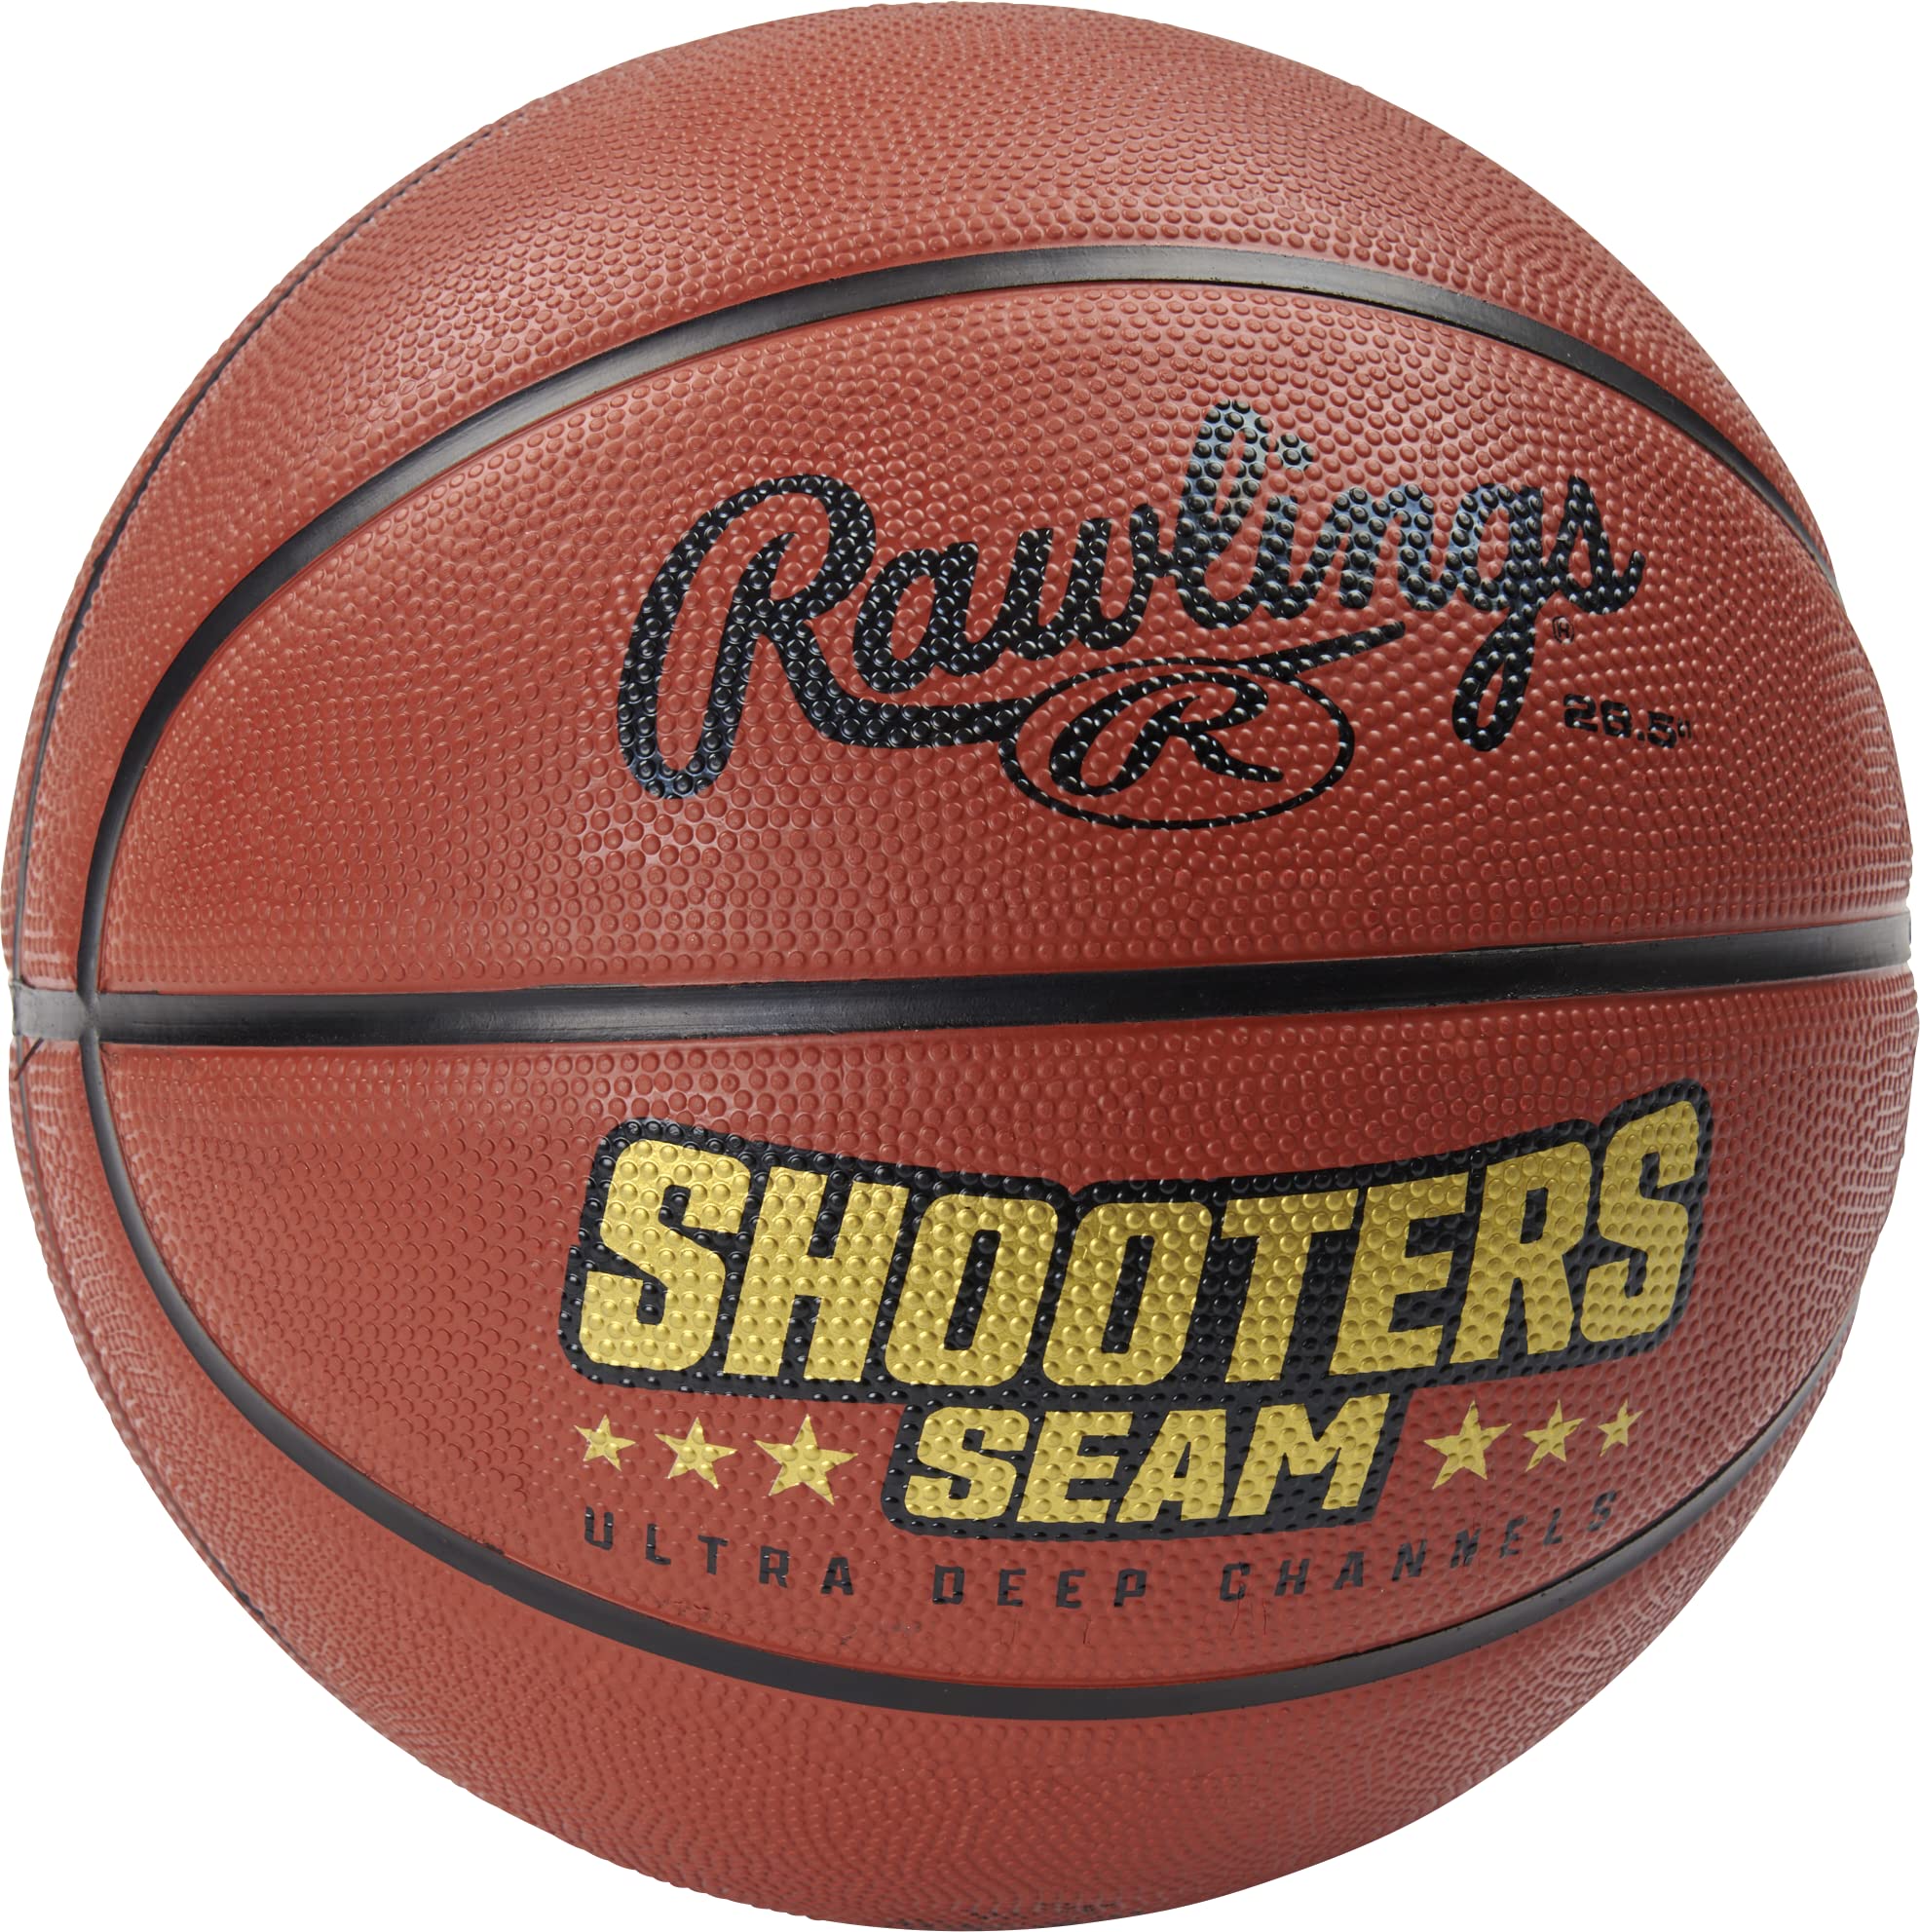 Rawlings Shooters Seam Junior Size Basketball